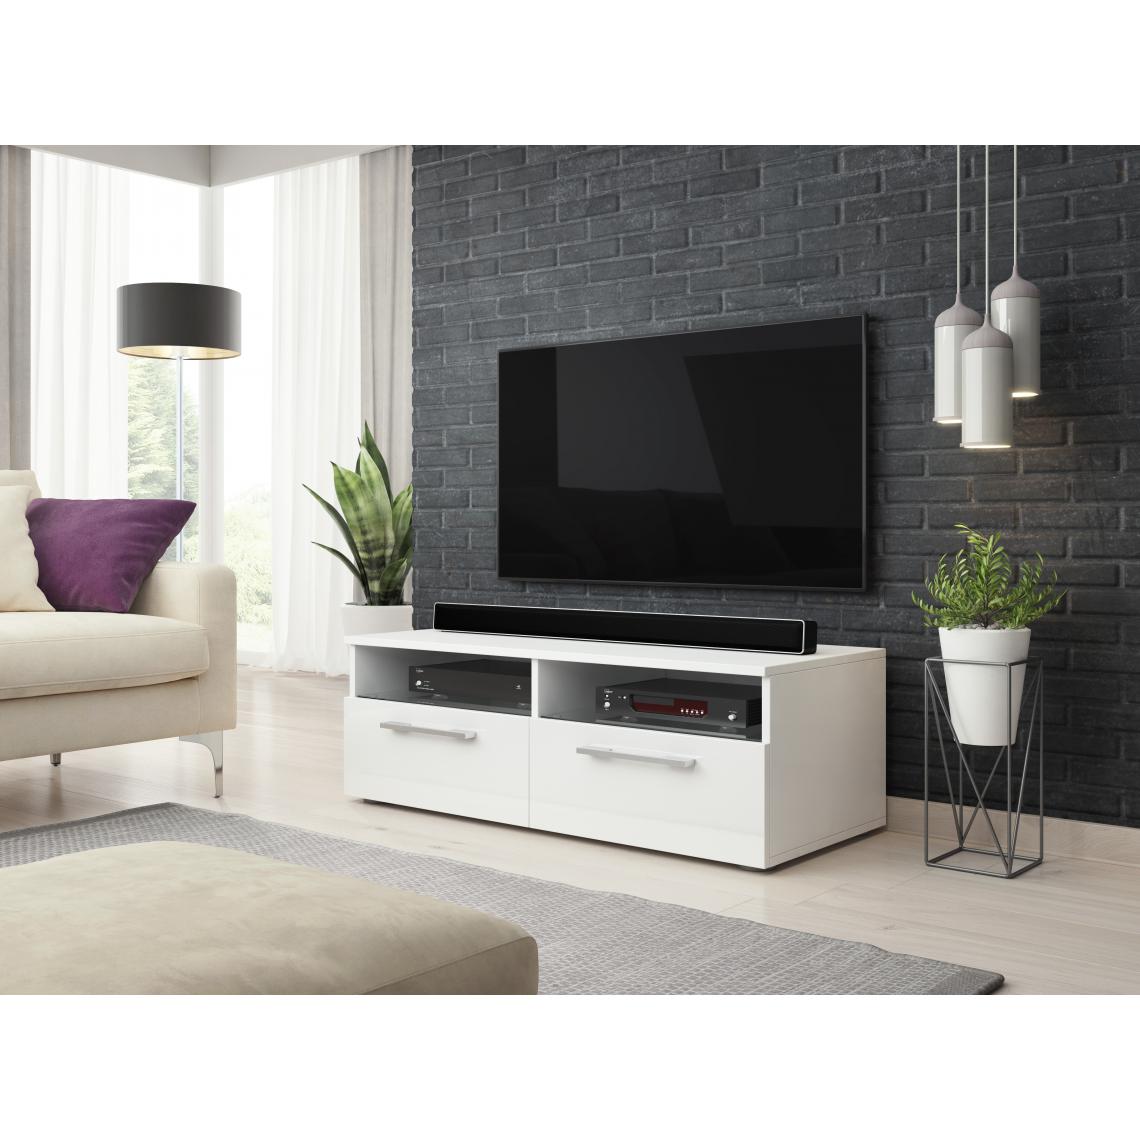 3xeliving - Classic Zumbi meuble TV blanc / blanc brillant 100cm - Meubles TV, Hi-Fi